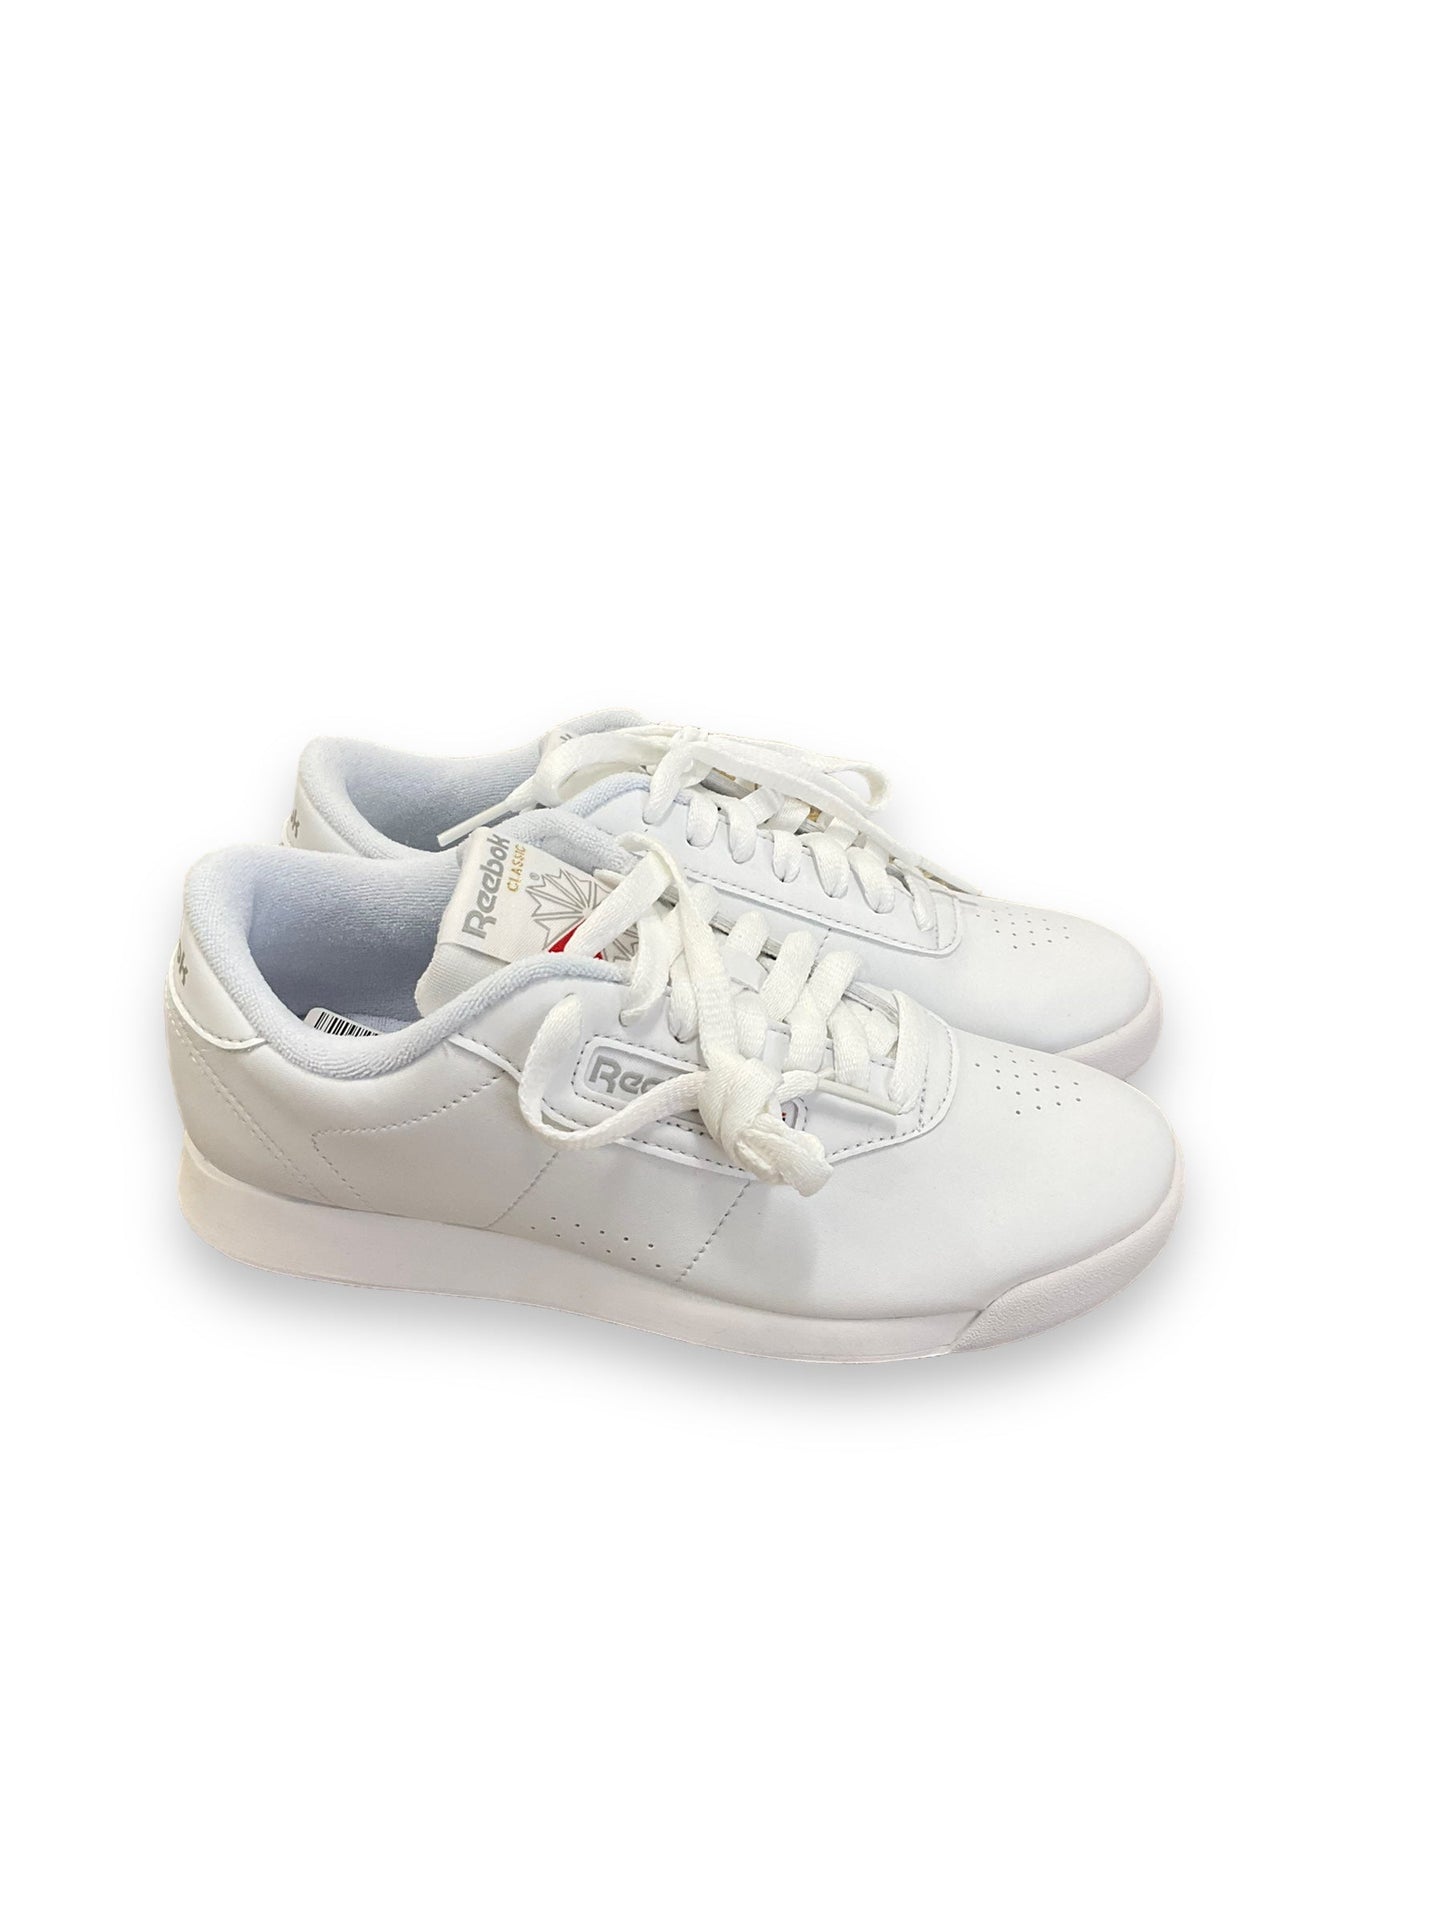 White Shoes Sneakers Reebok, Size 6.5